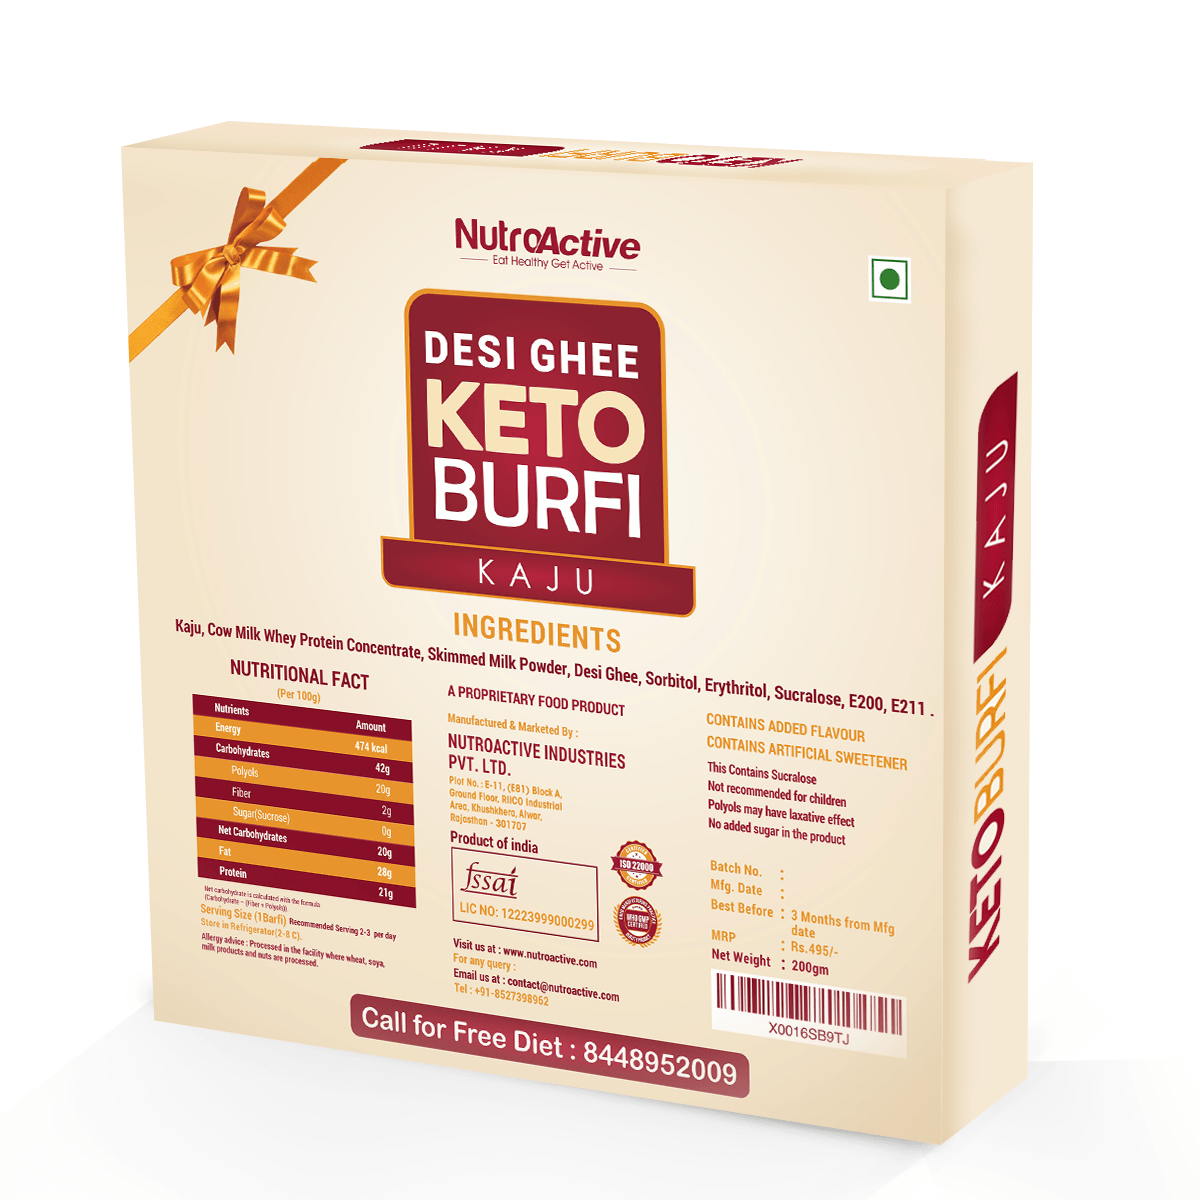 Keto Barfi - Combo Pack - Kaju, Chocolate and Coconut- 200g Each - Diabexy